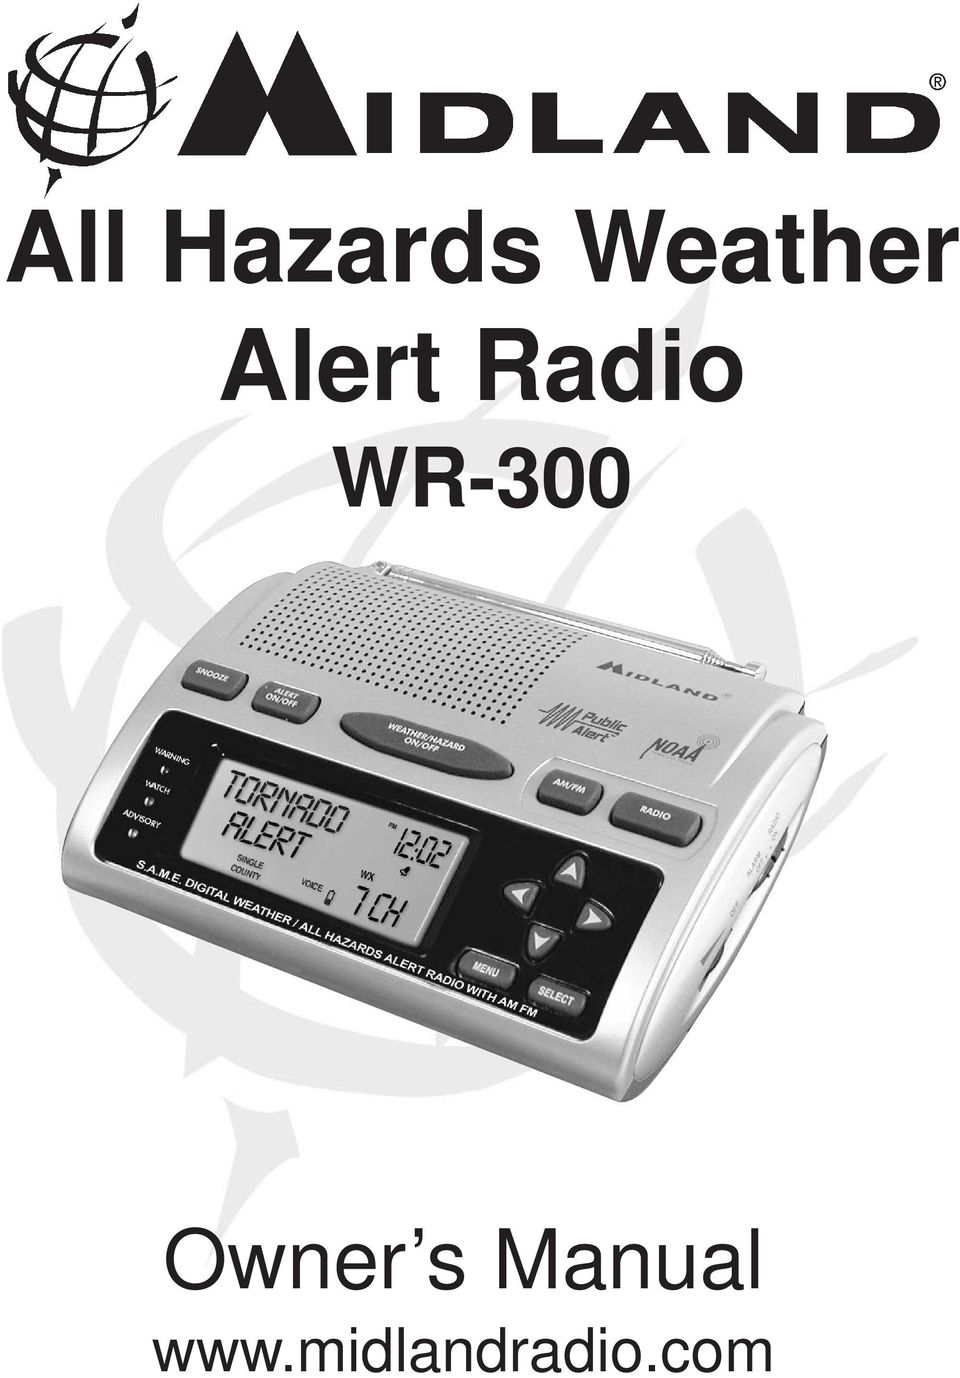 Radio WR-300